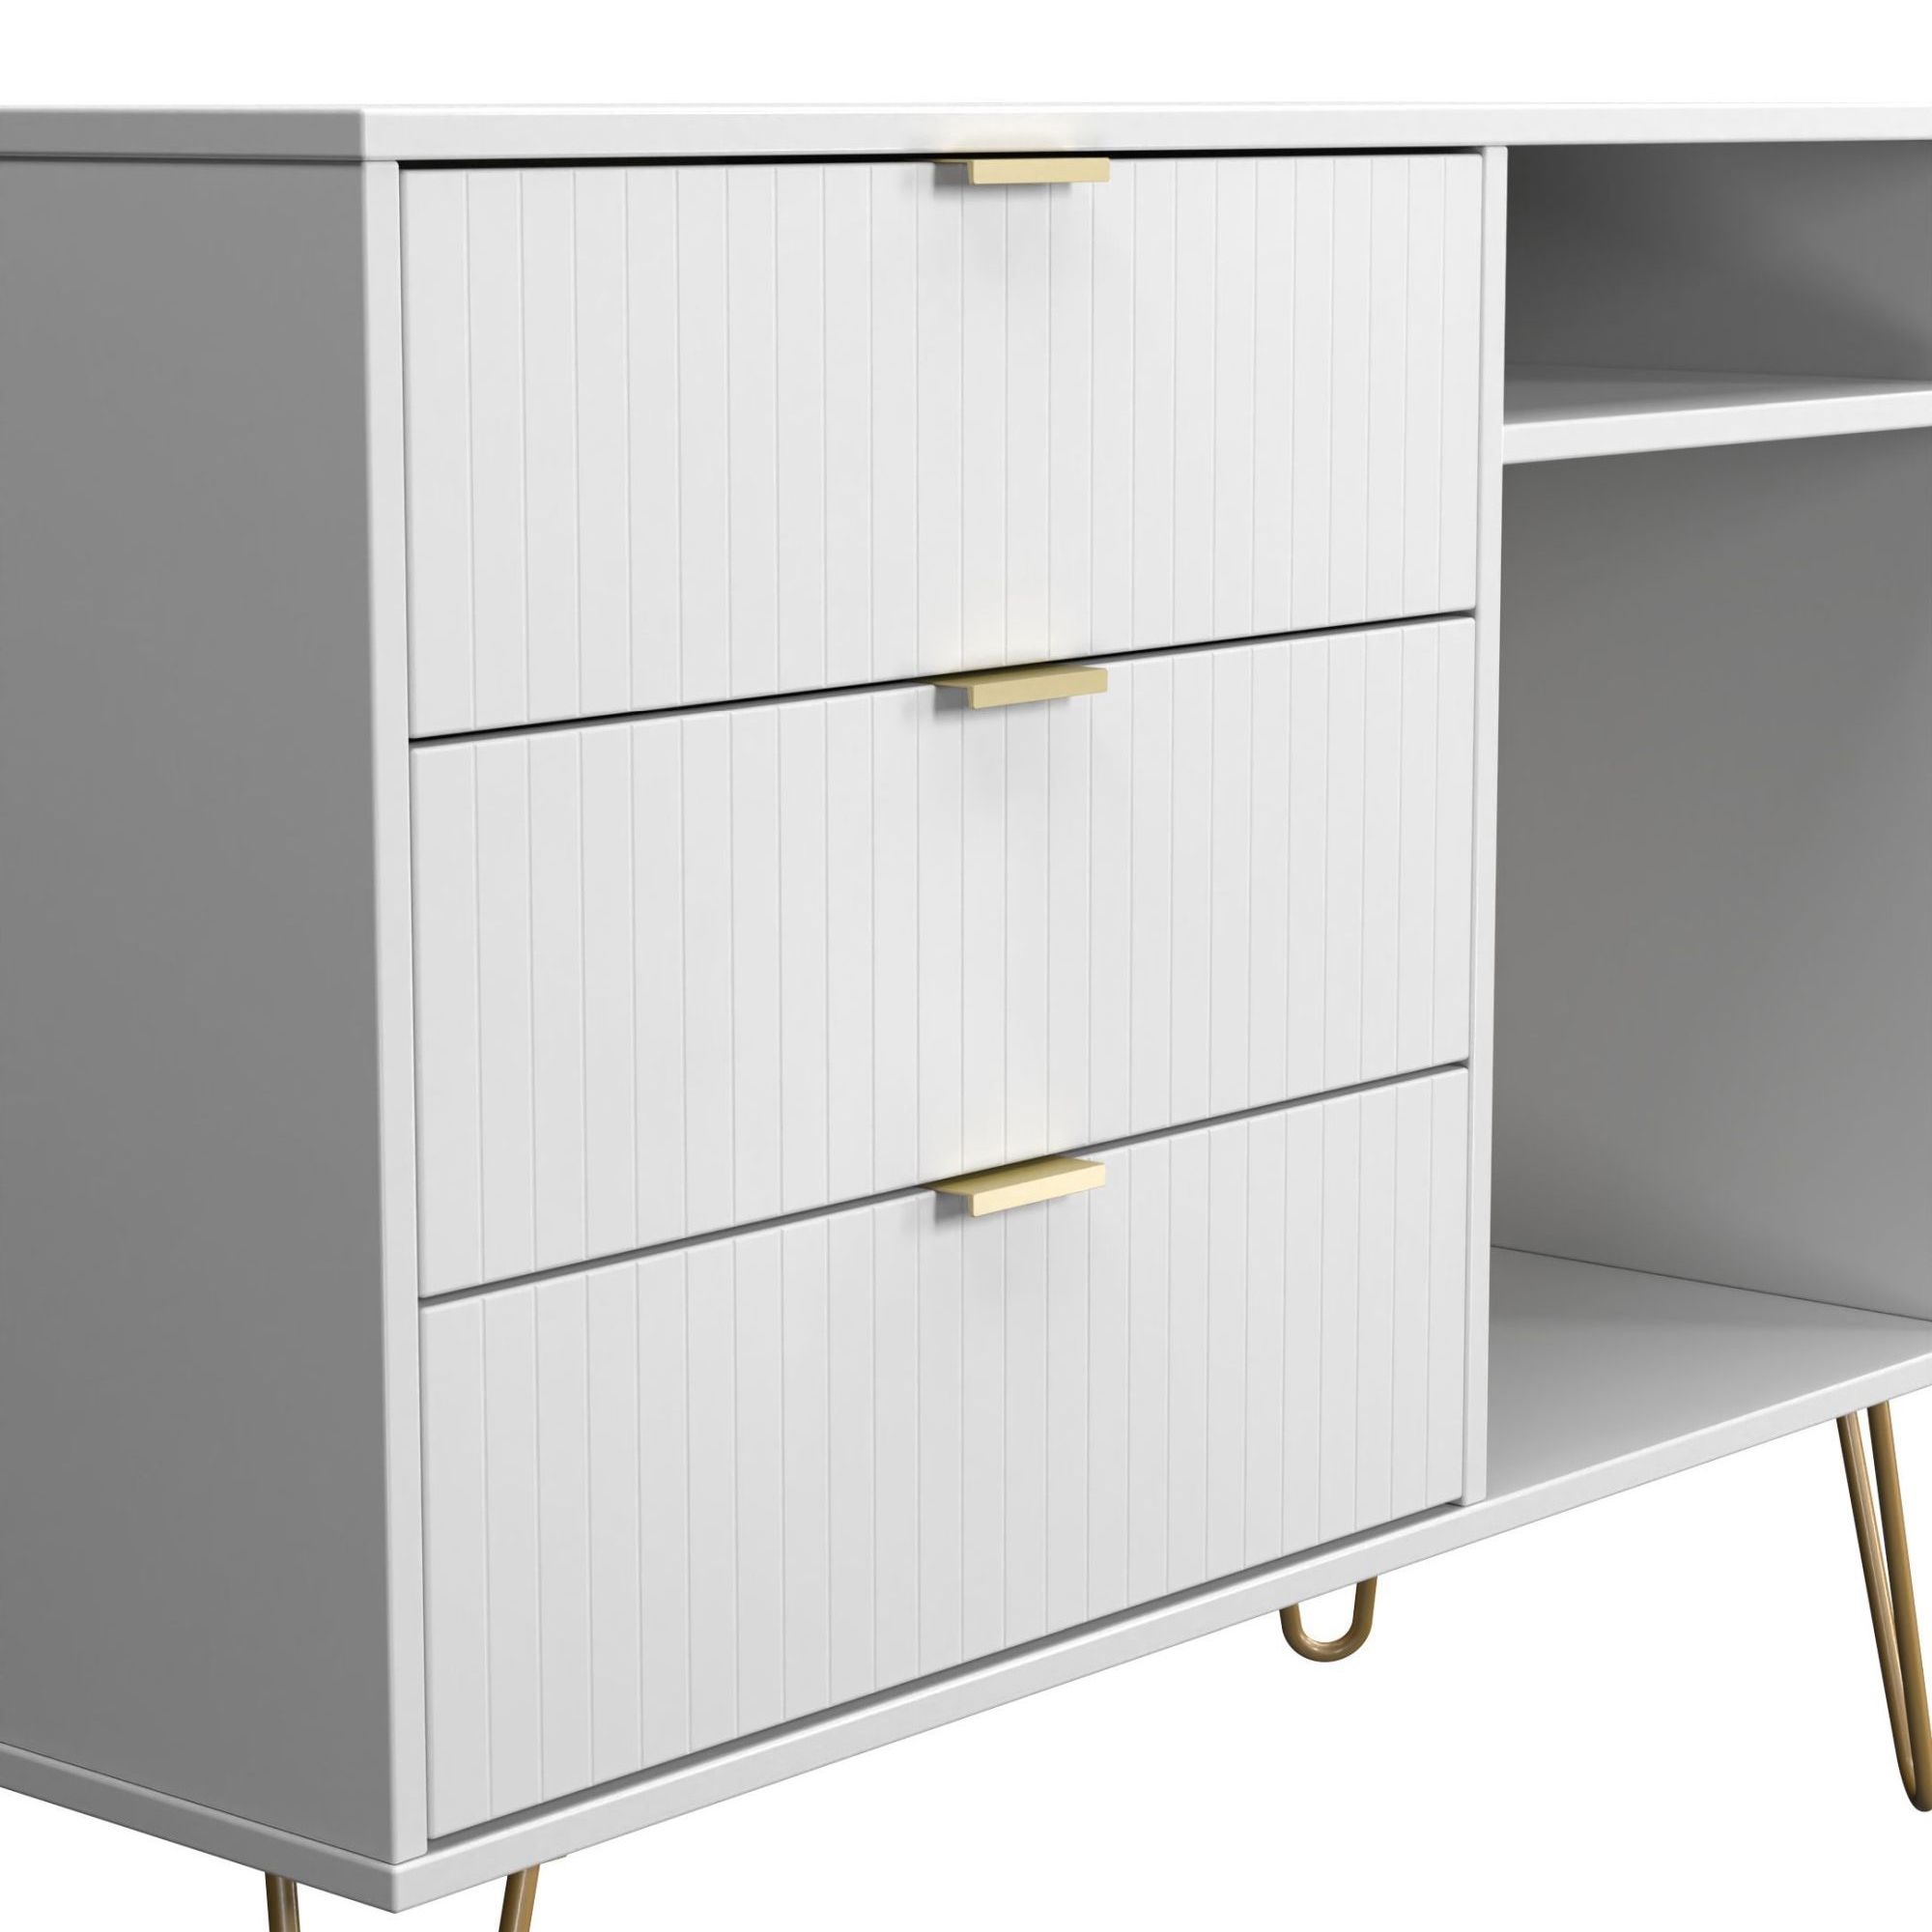 Linear Ready assembled Matt white Media unit with 2 shelves & 3 drawers, (H)97cm x (W)74cm x (D)39.5cm